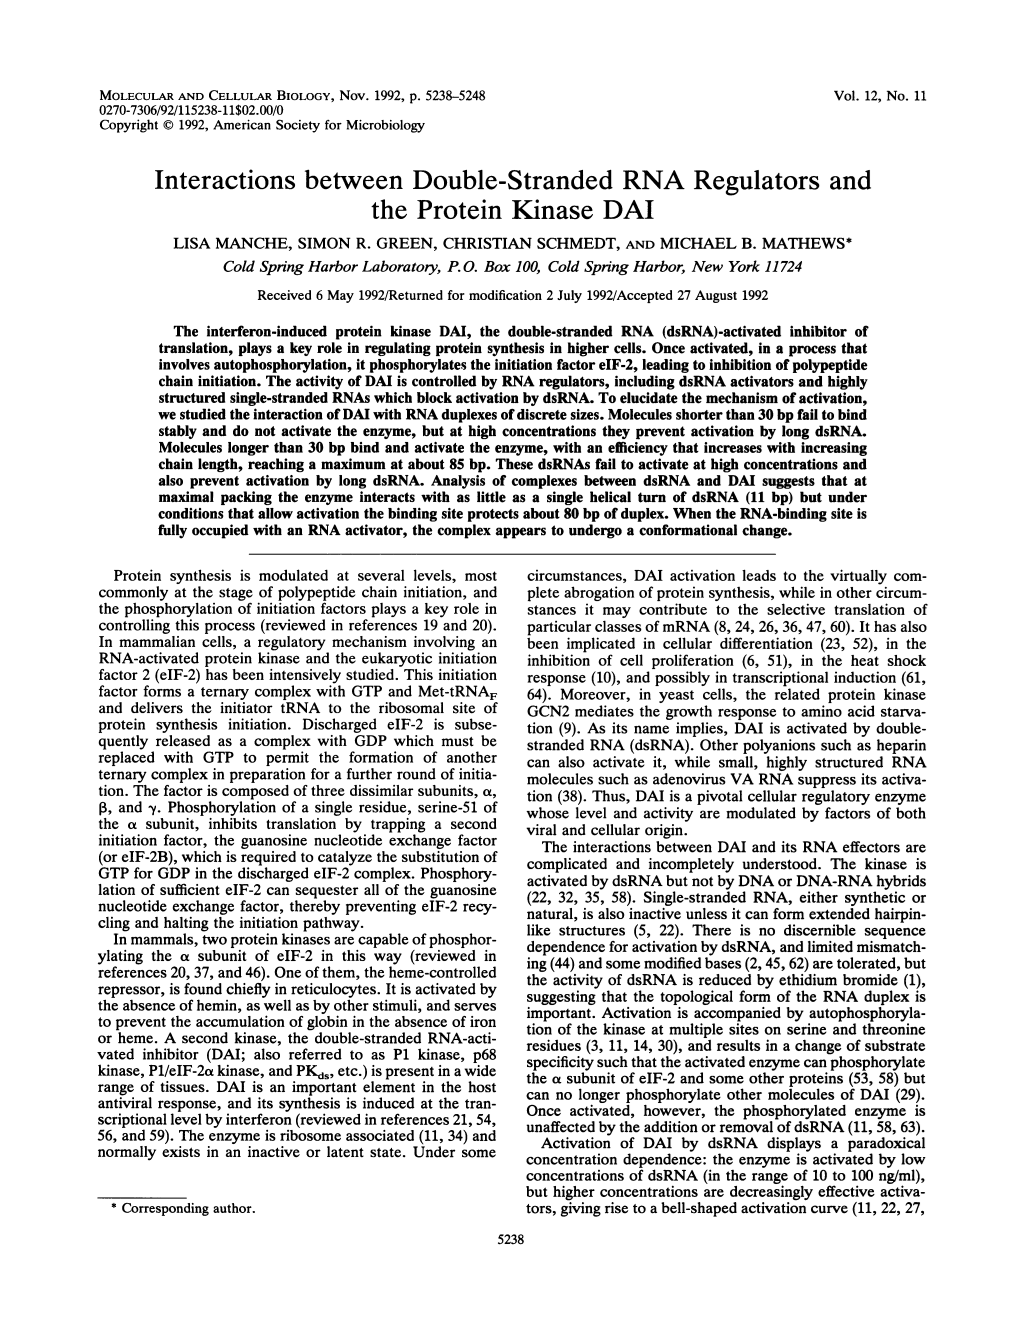 The Protein Kinase DAI LISA MANCHE, SIMON R